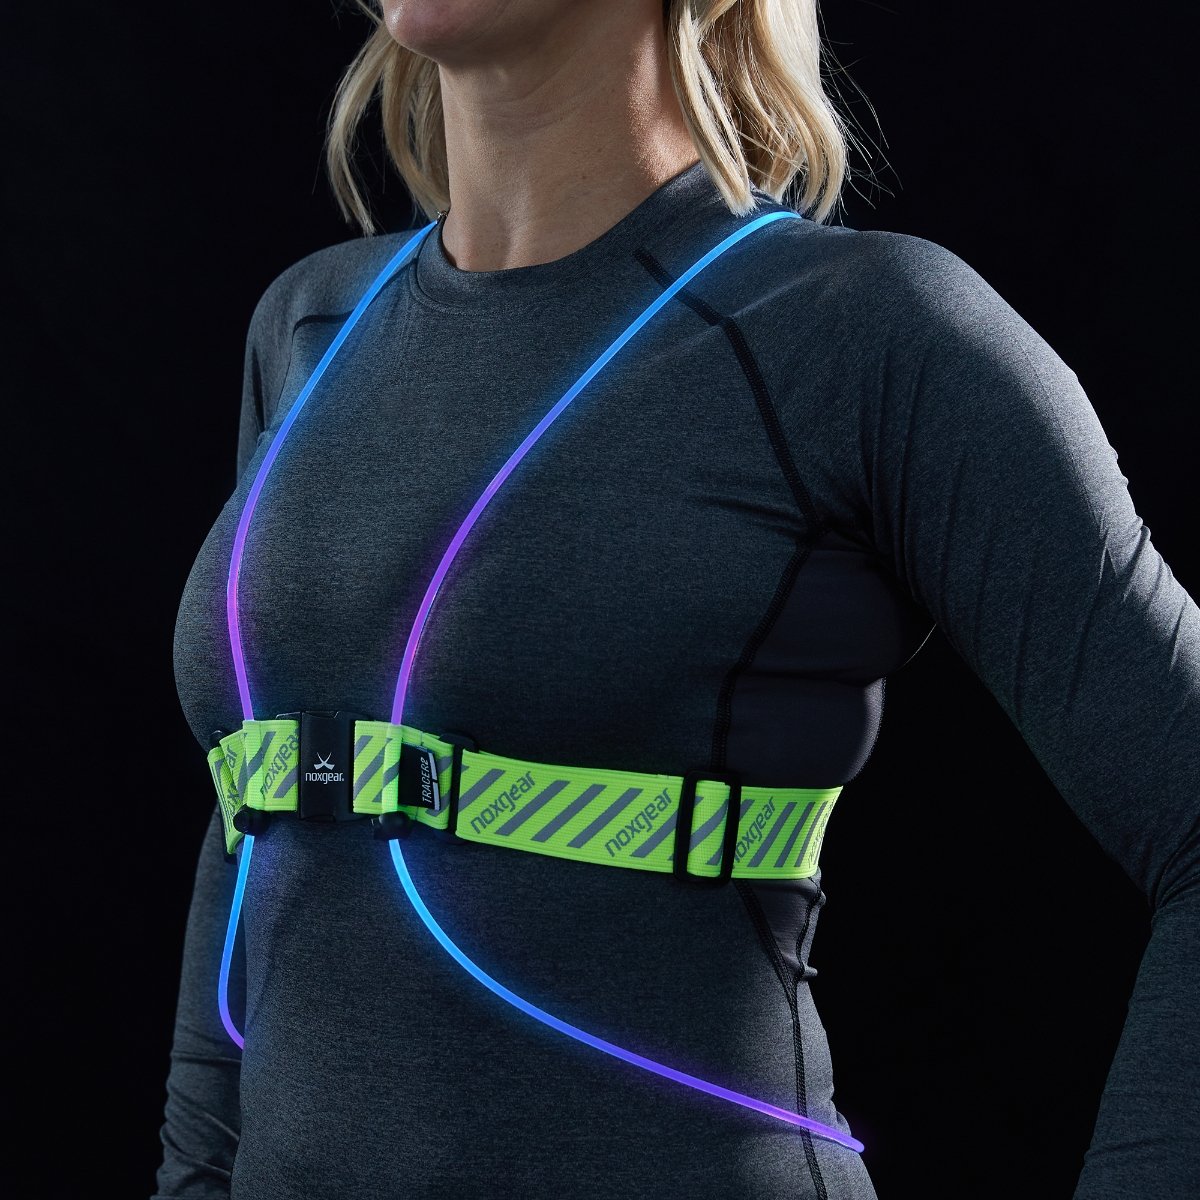 Reflective Running Gear Safety Bundle - Reflective Vest + LED Safety Light  (2 Pack) + Reflective Bands